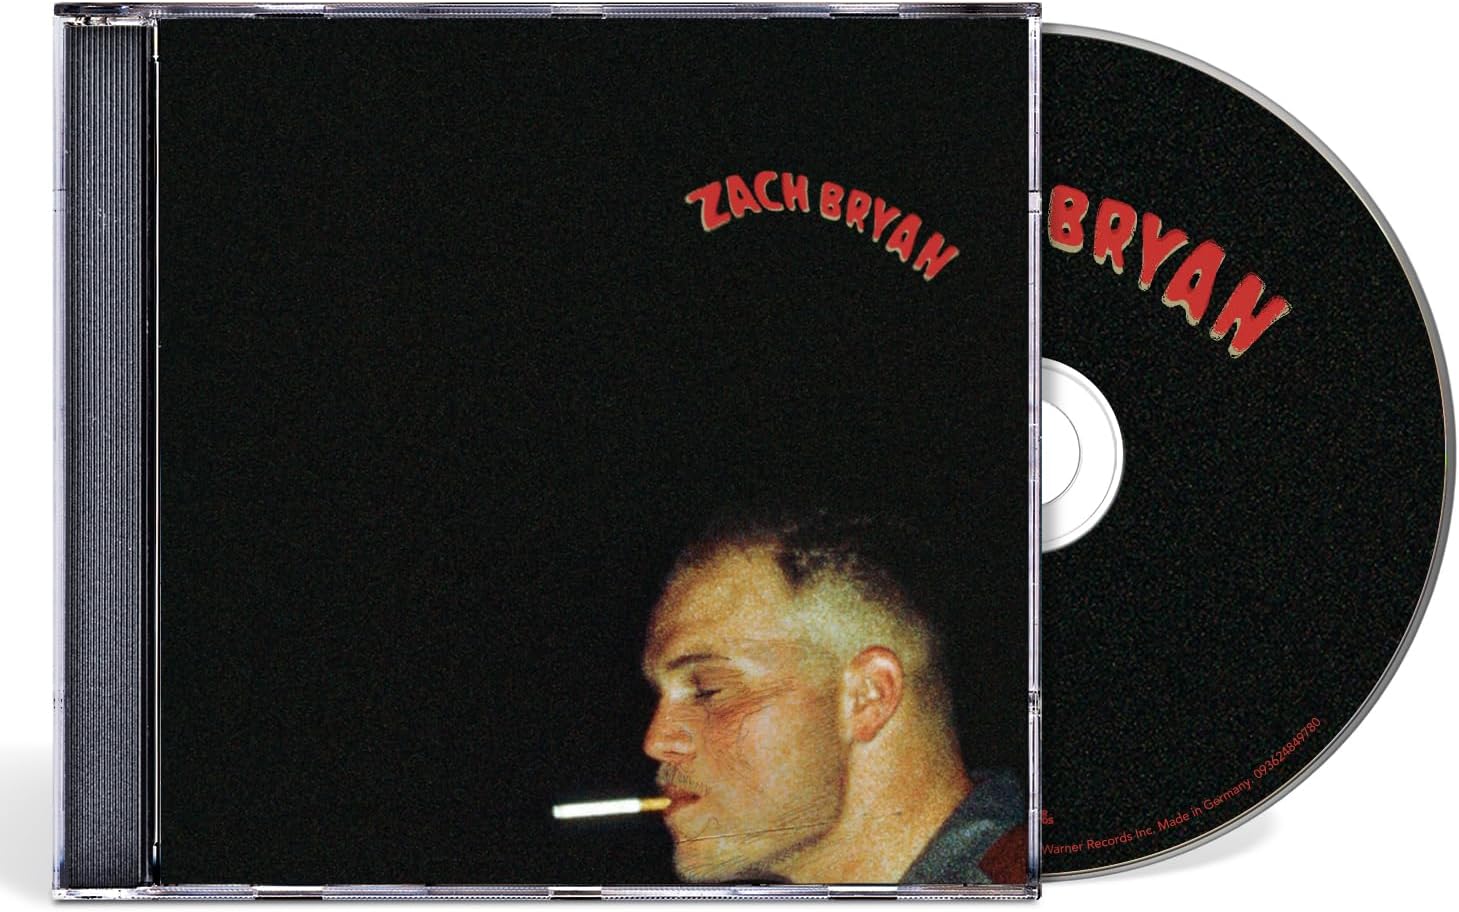 Zach Bryan - Zach Bryan - CD (UK Link)